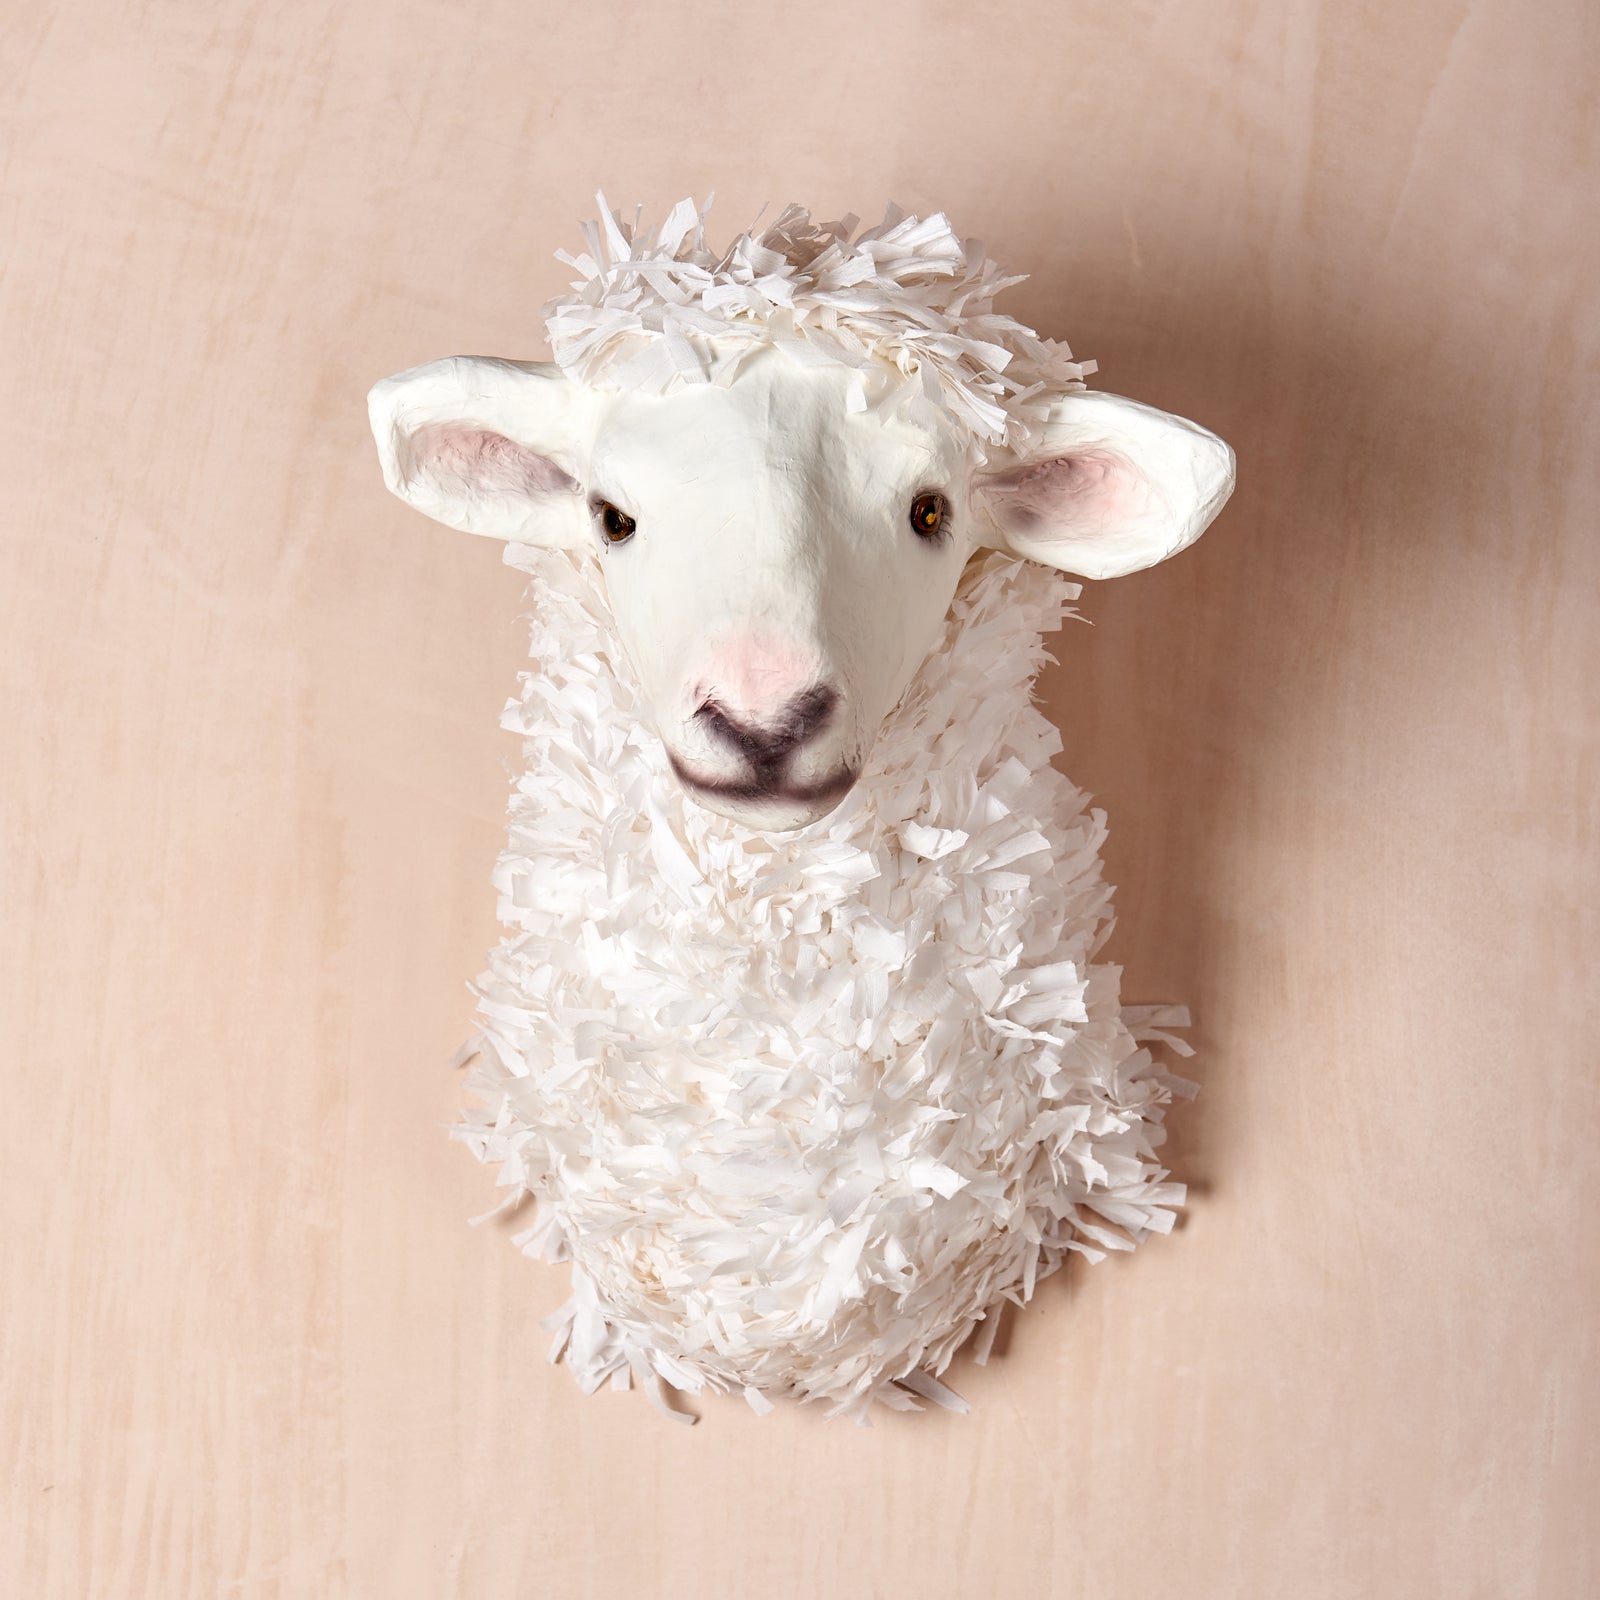 Sheep Mount Ornament